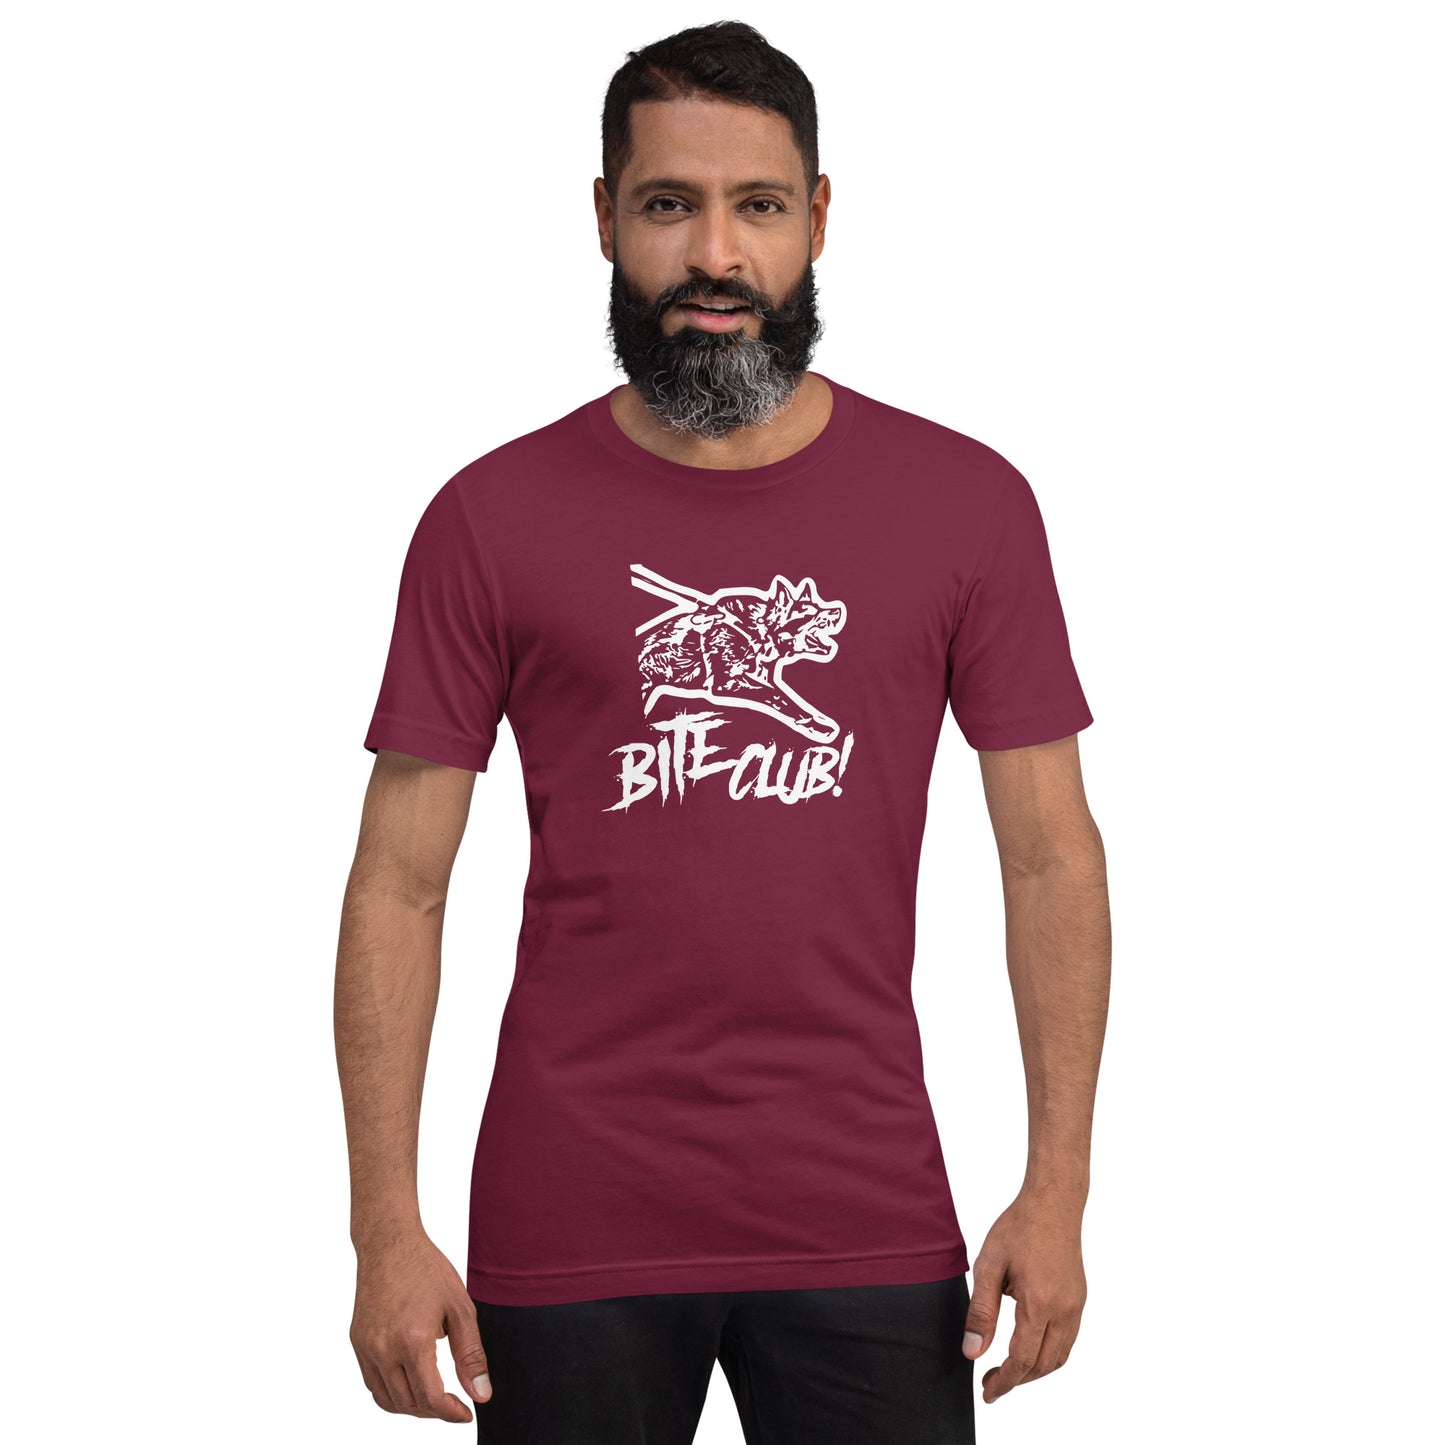 BITE CLUB- Unisex t-shirt